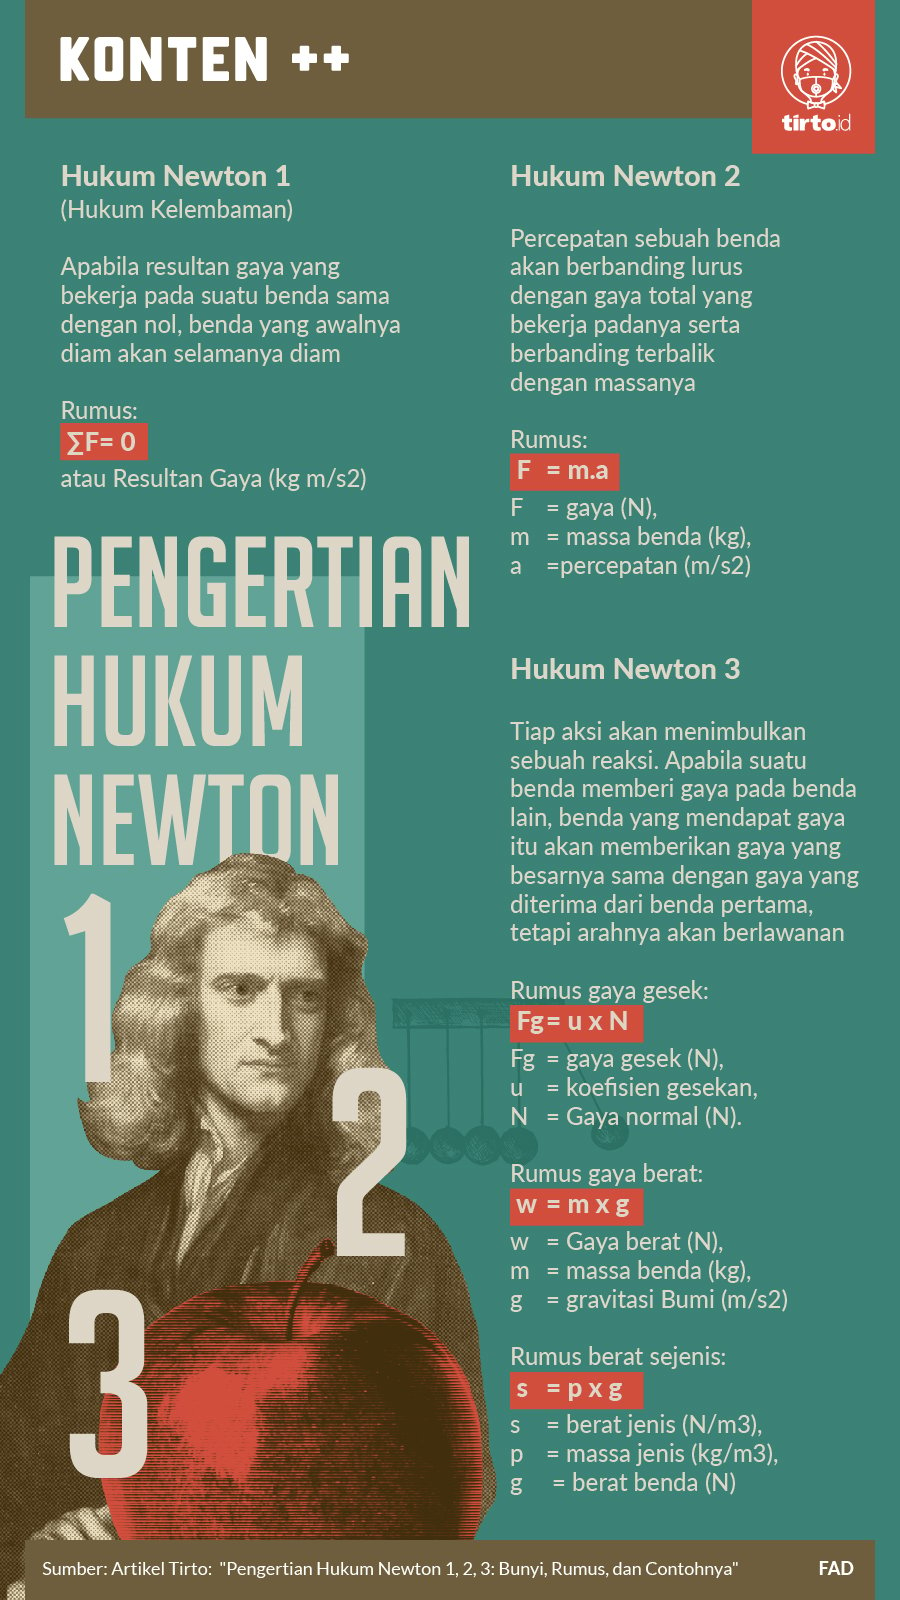 Newton hukum kedua gerakan Hukum Newton